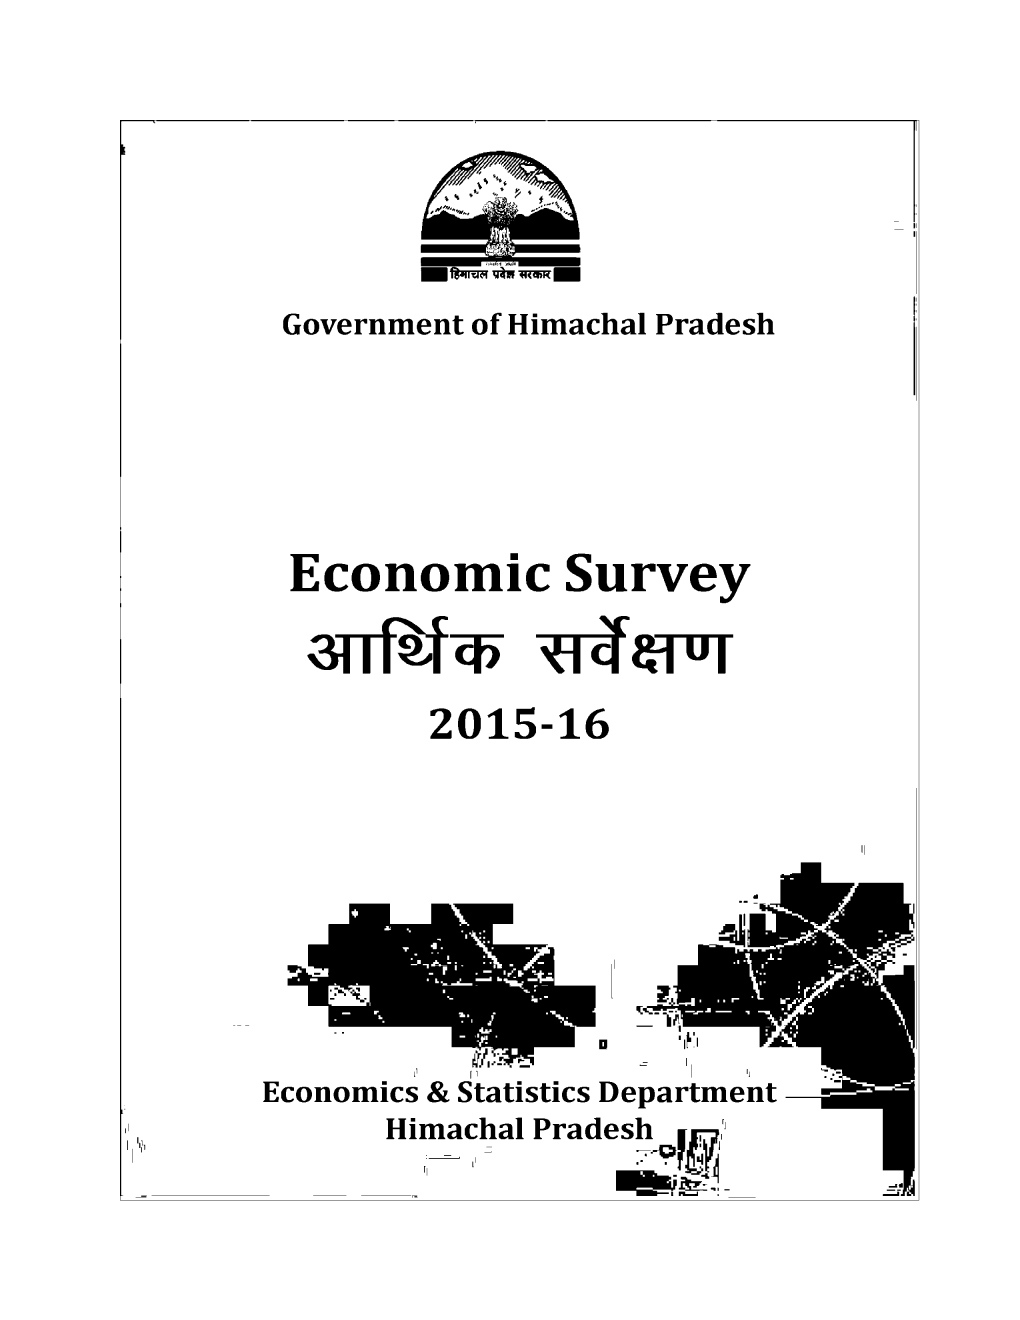 Government of Himachal Pradesh Economic Survey